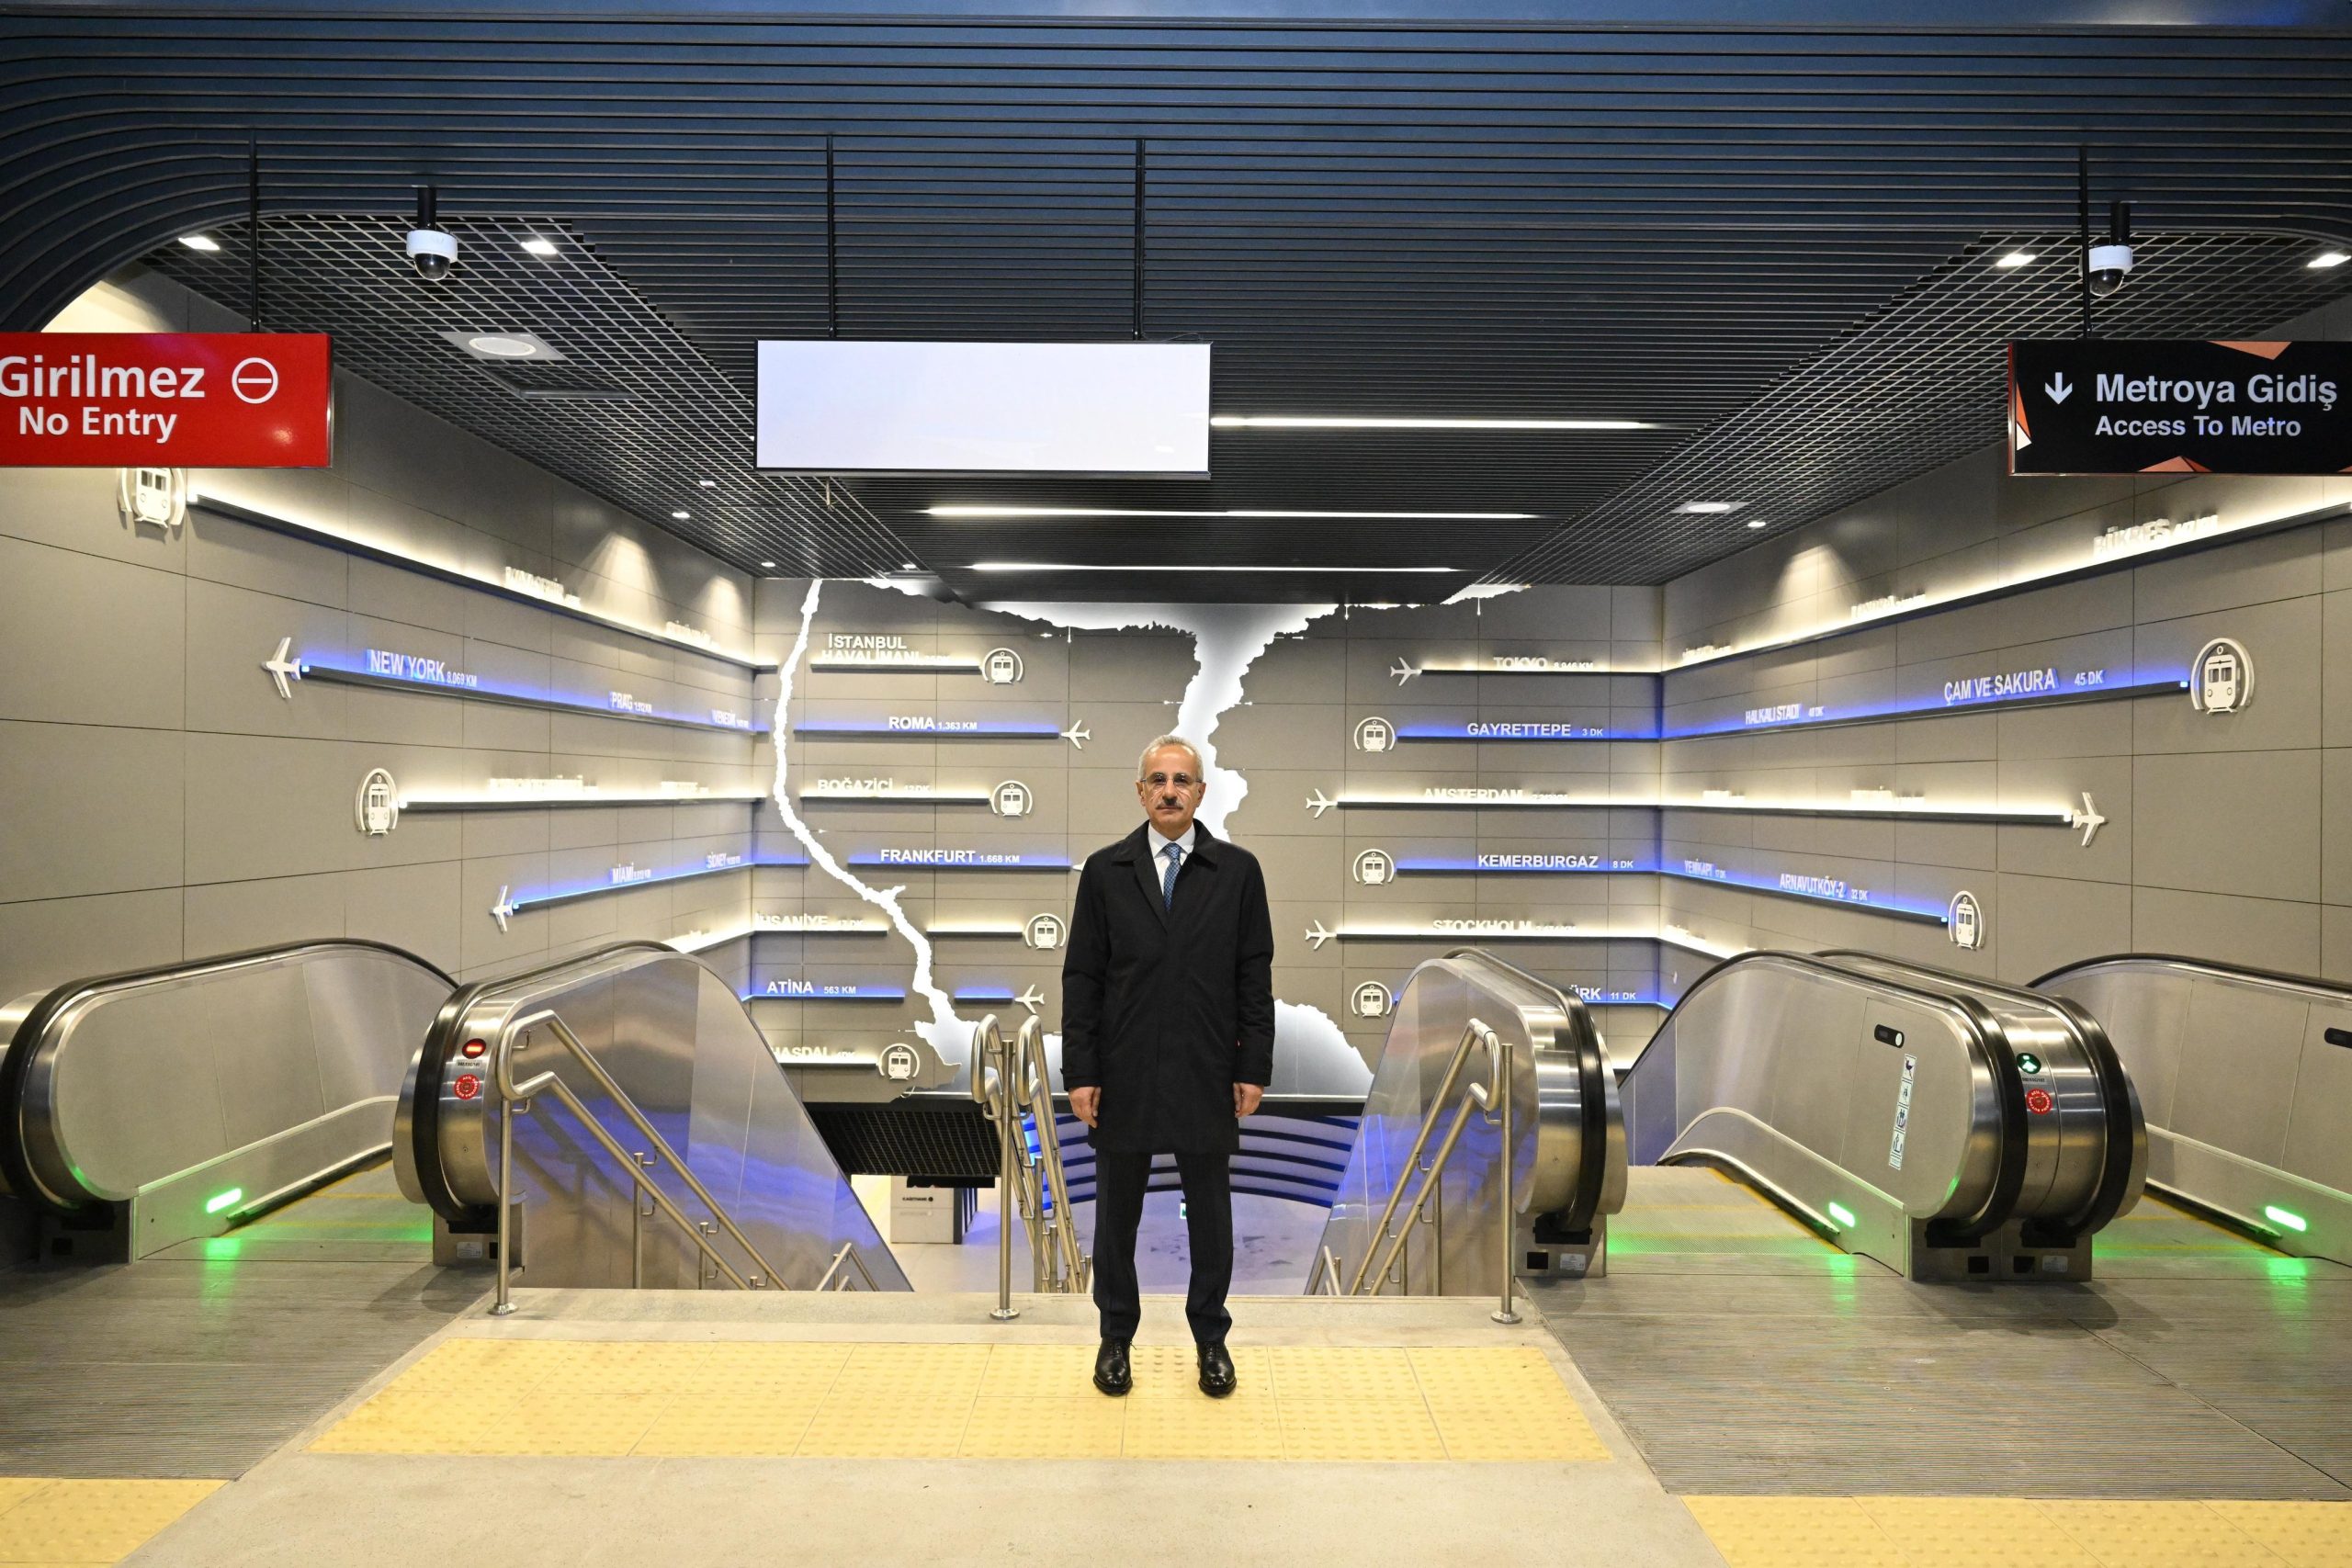 Turecký ministr dopravy v novém metru. Foto: Abdulkadir URALOĞLU / X.com